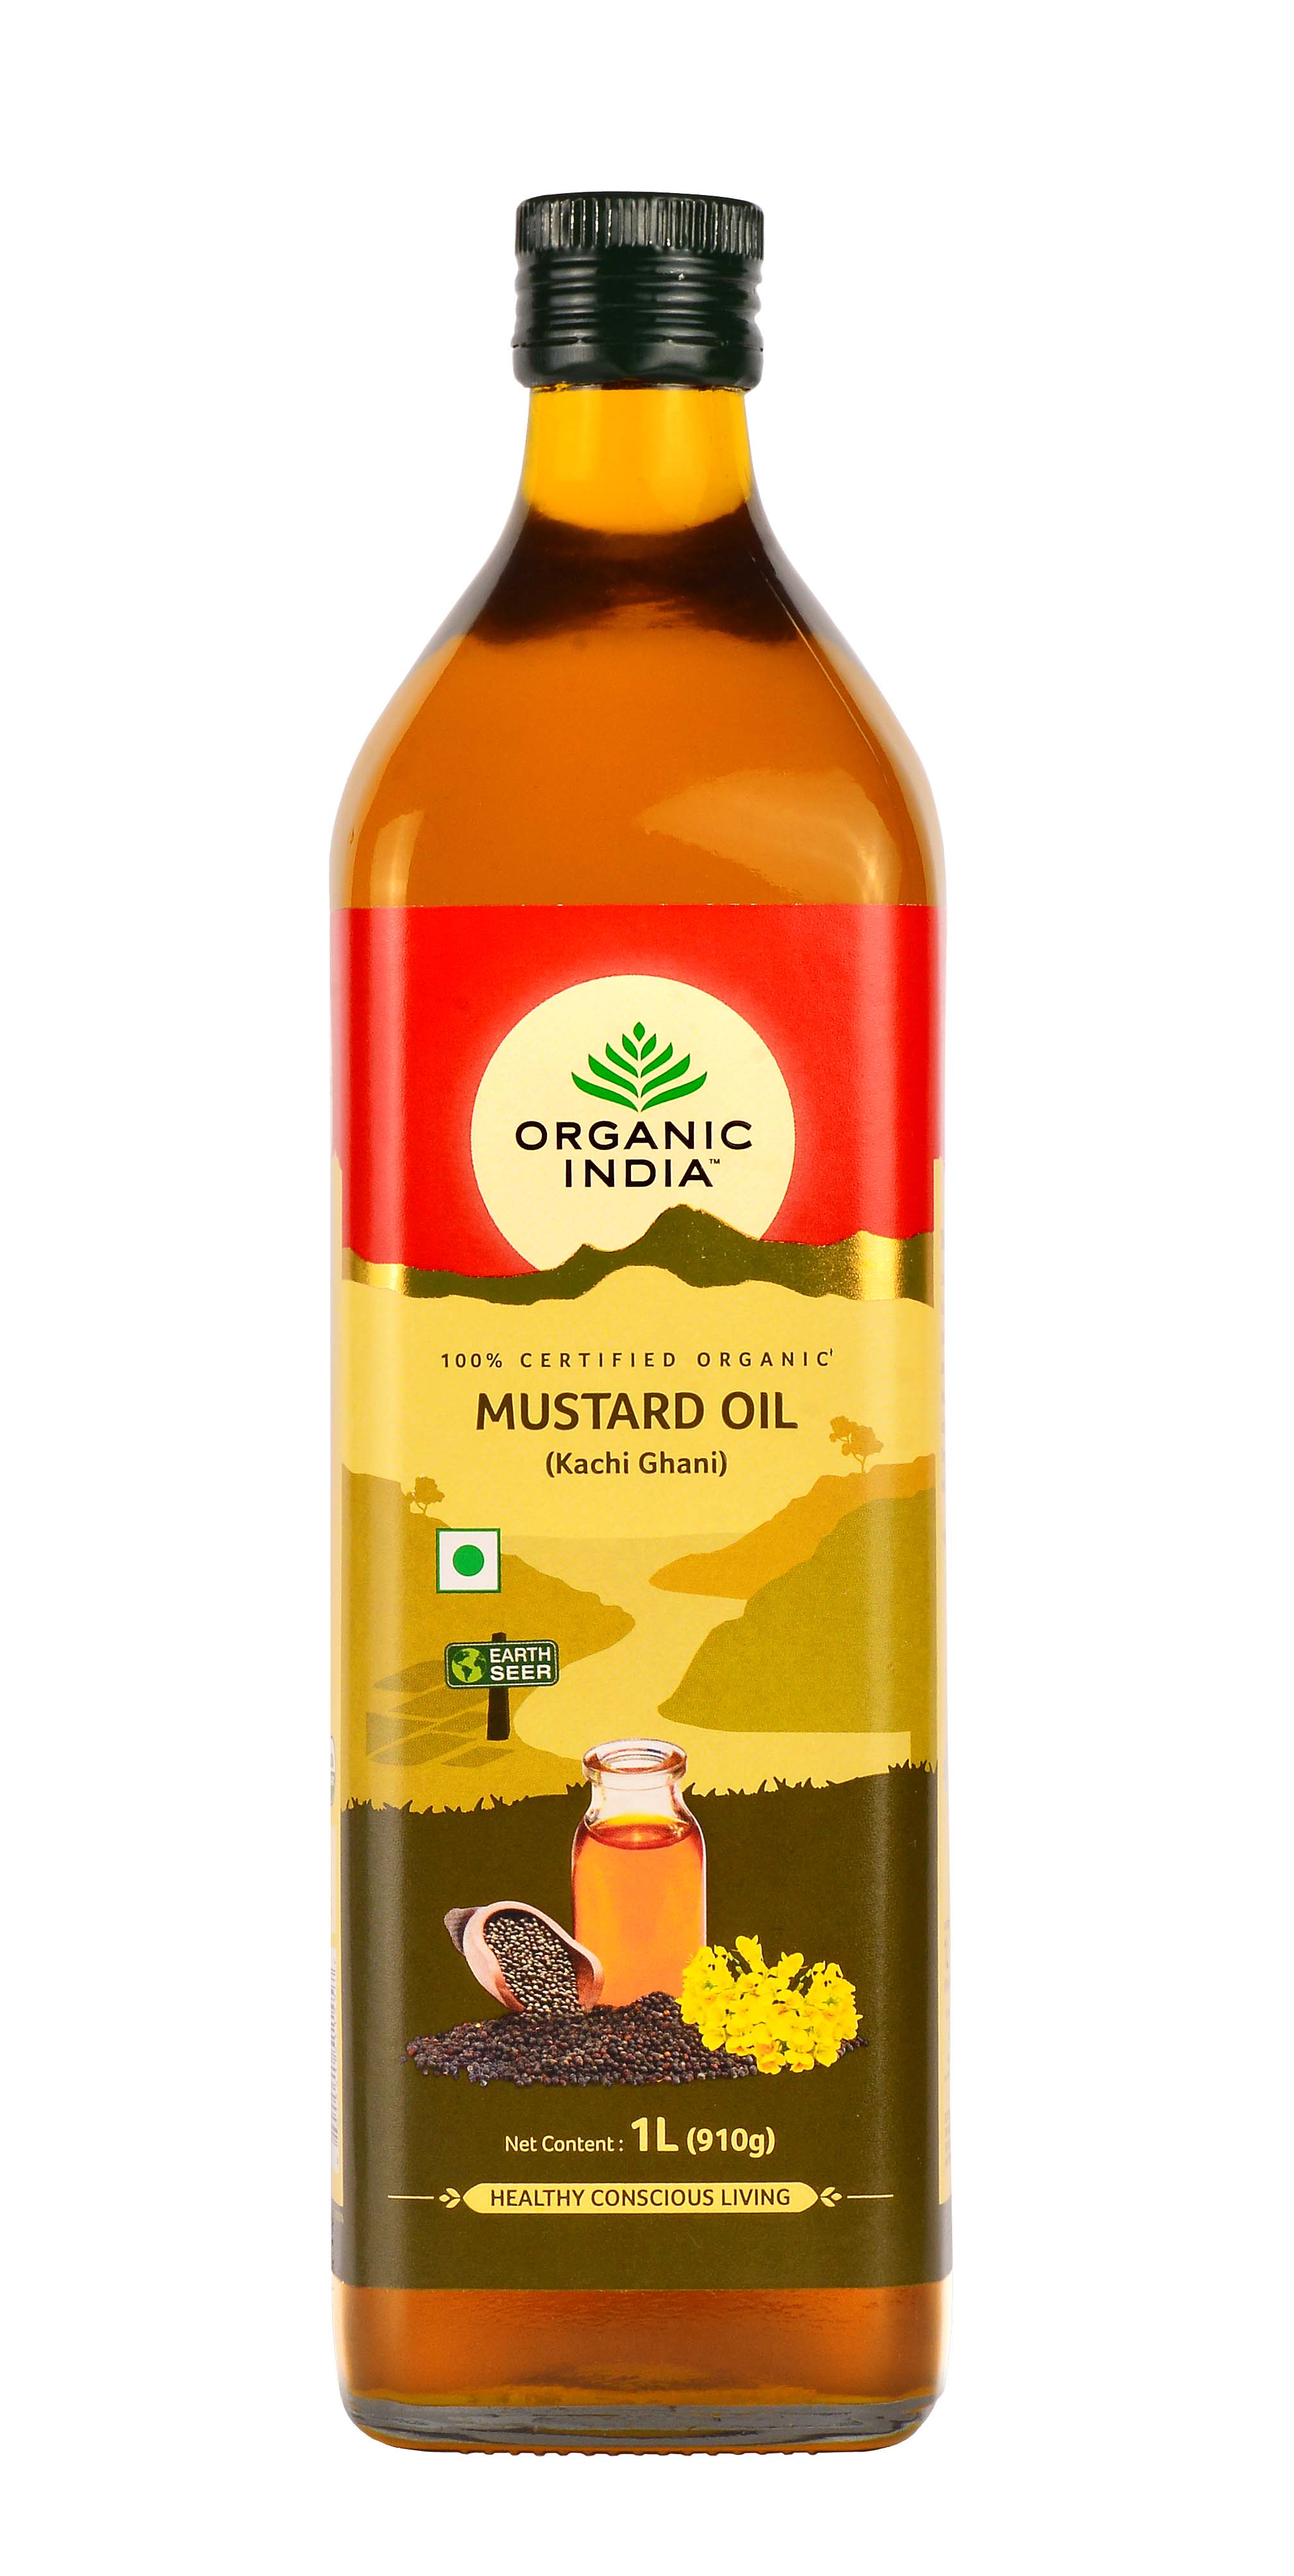 Organic India Mustard oil